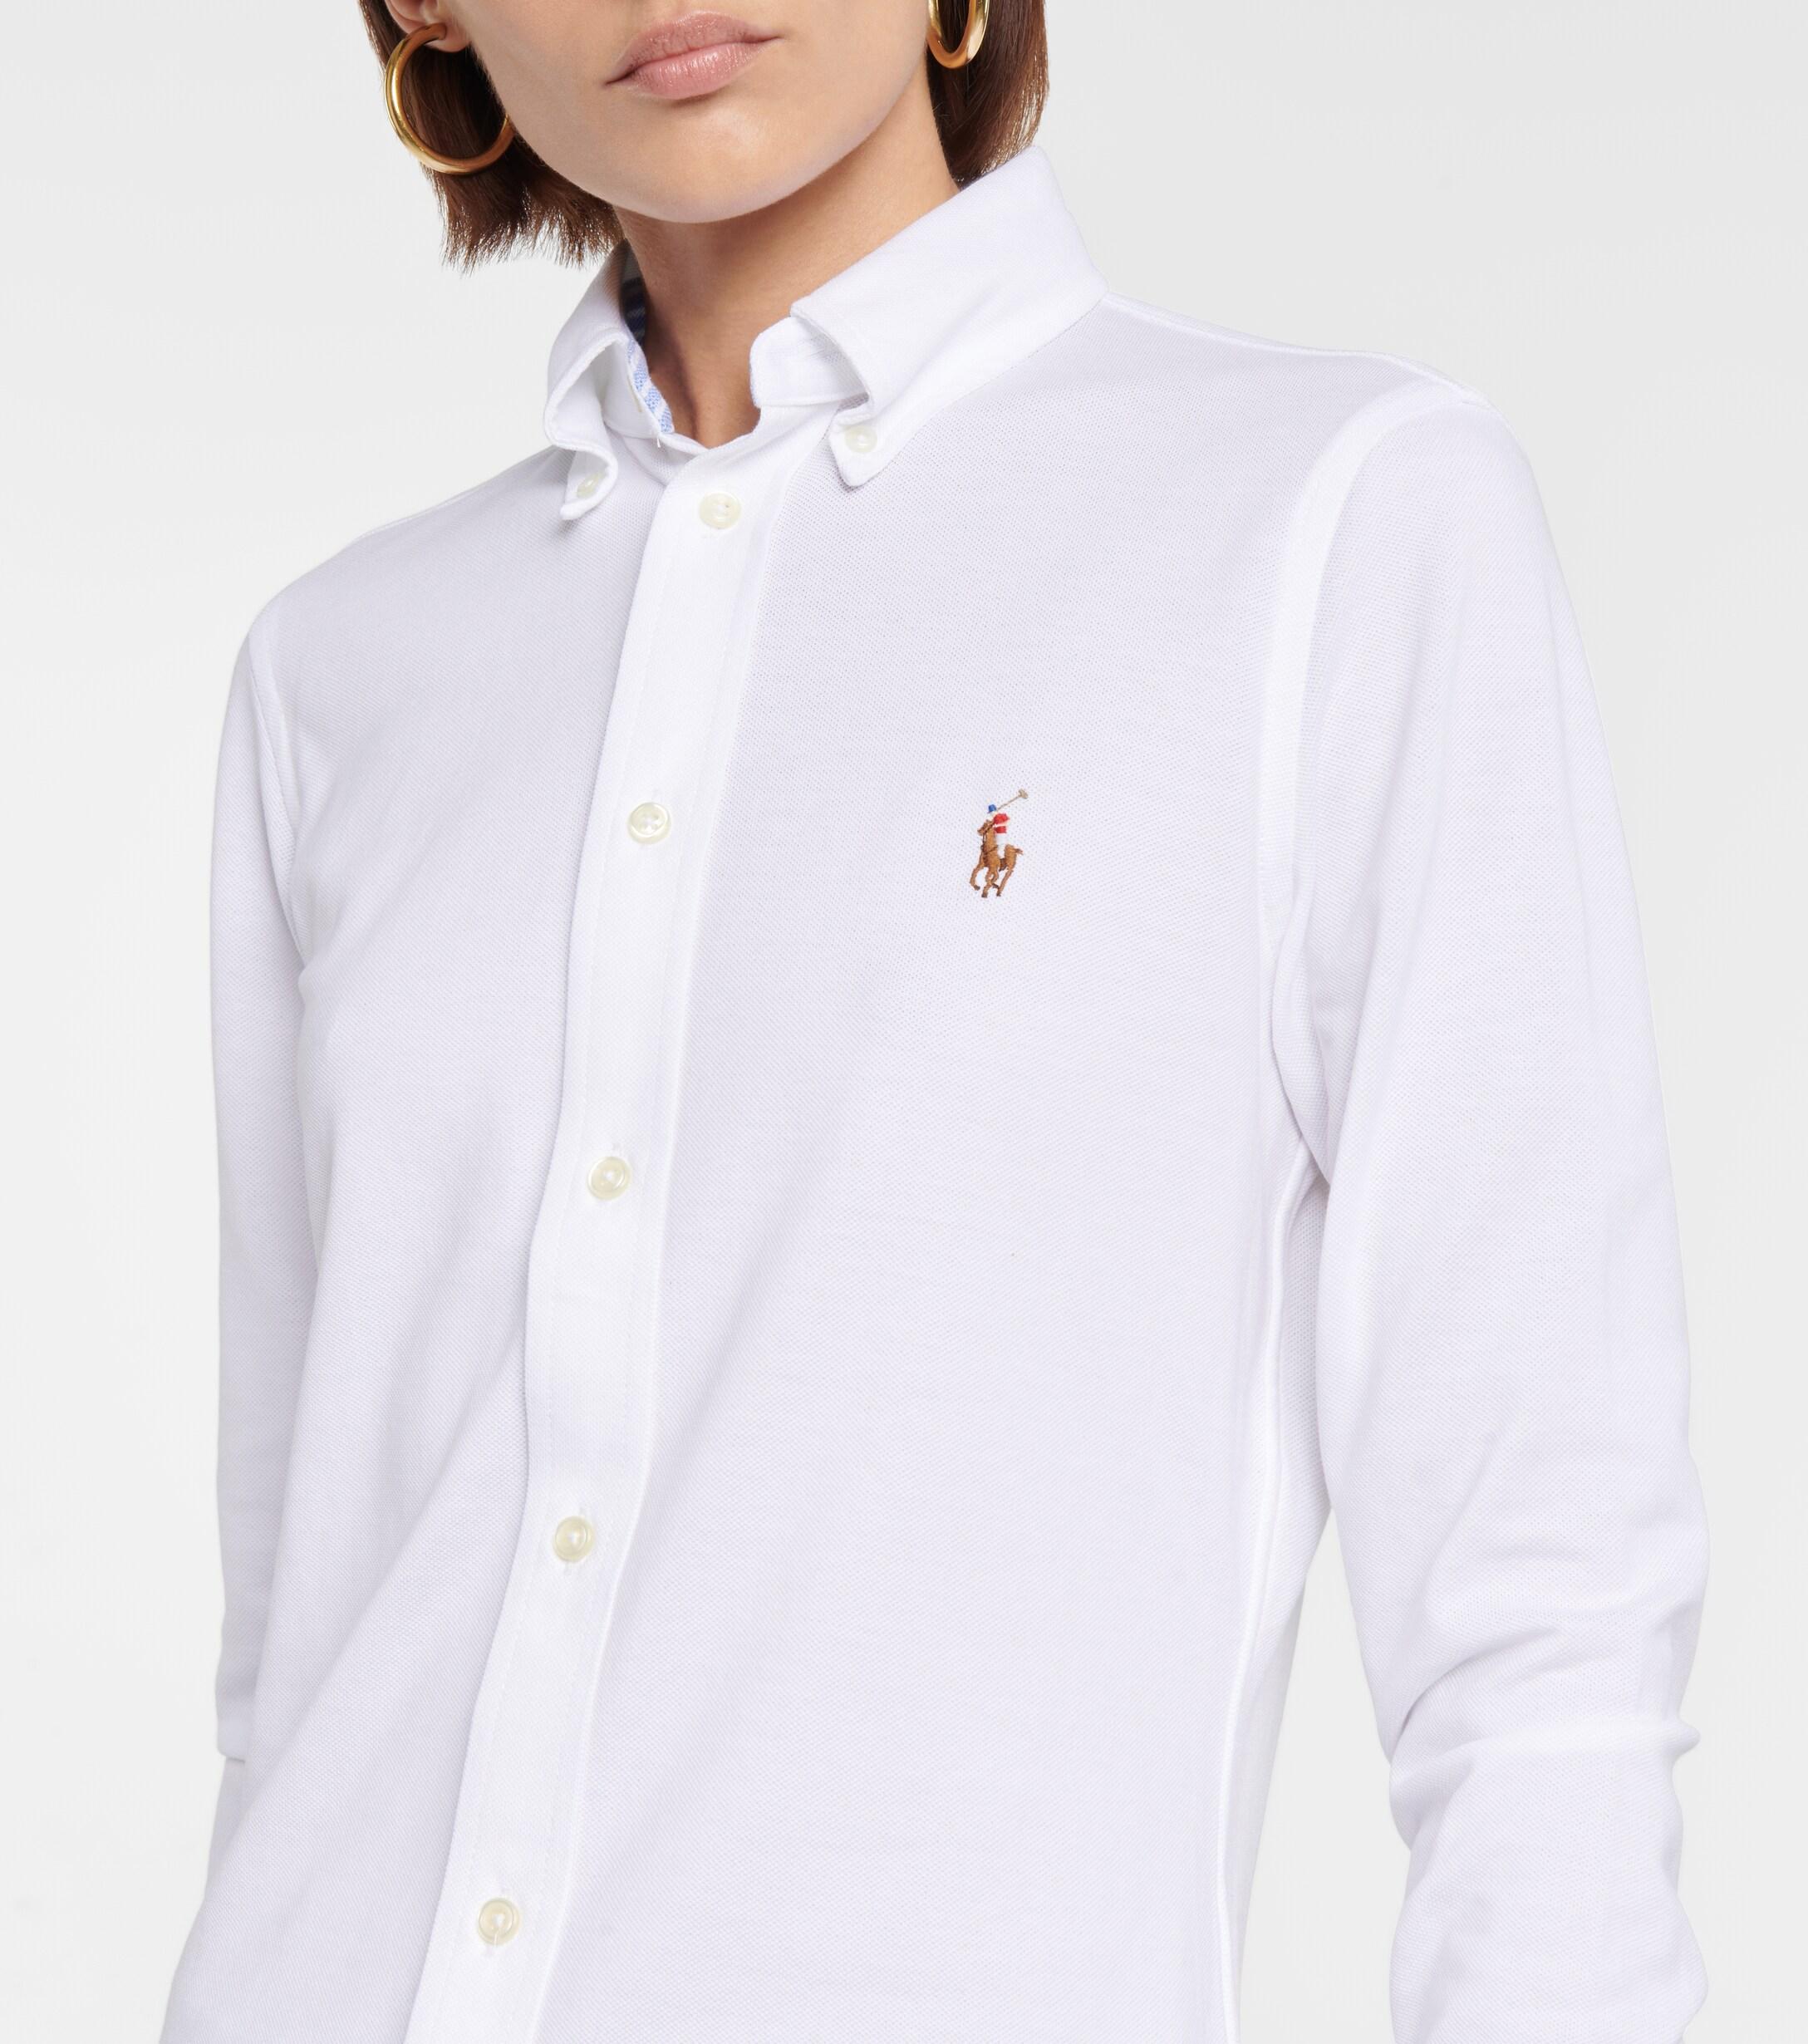 Polo Ralph Lauren Heidi Cotton Piqué Shirt in White - Lyst